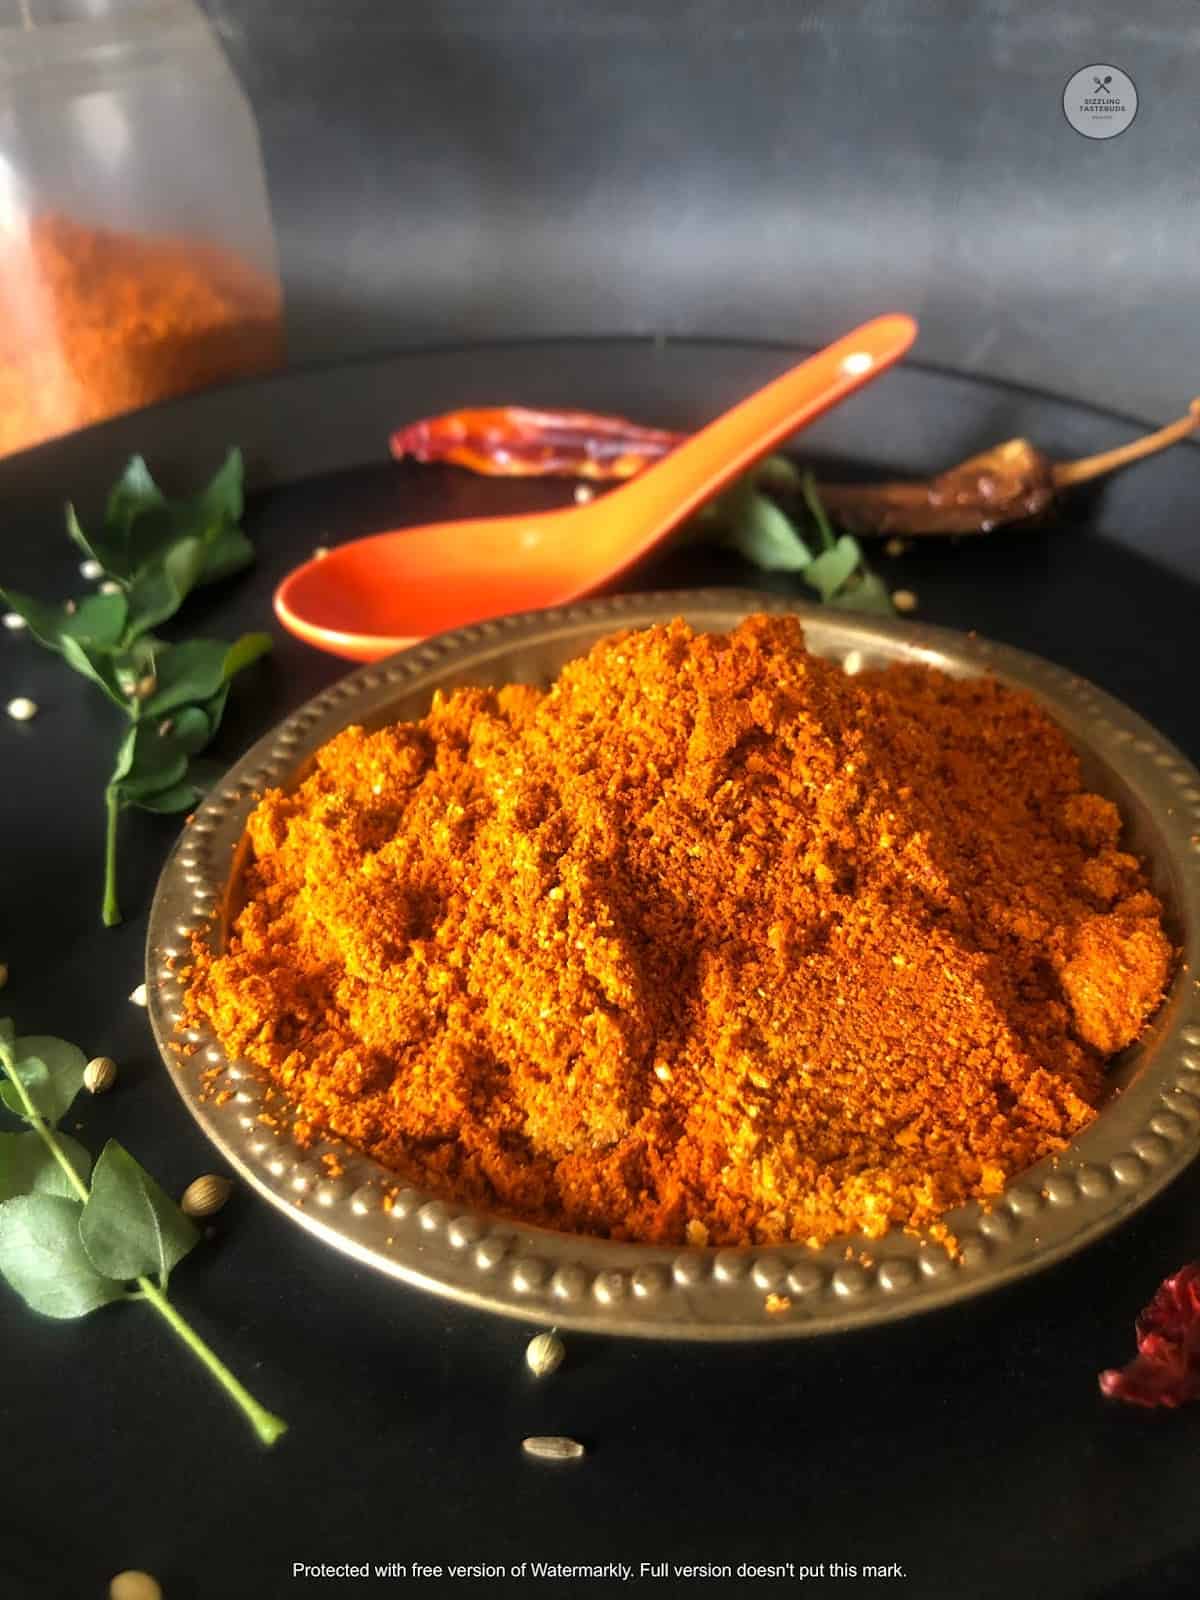 Authentic Homemade Recipe to make Mysore Style Sambhar Powder. Aromatic Spice Mix to make delicious Sambhar at home.